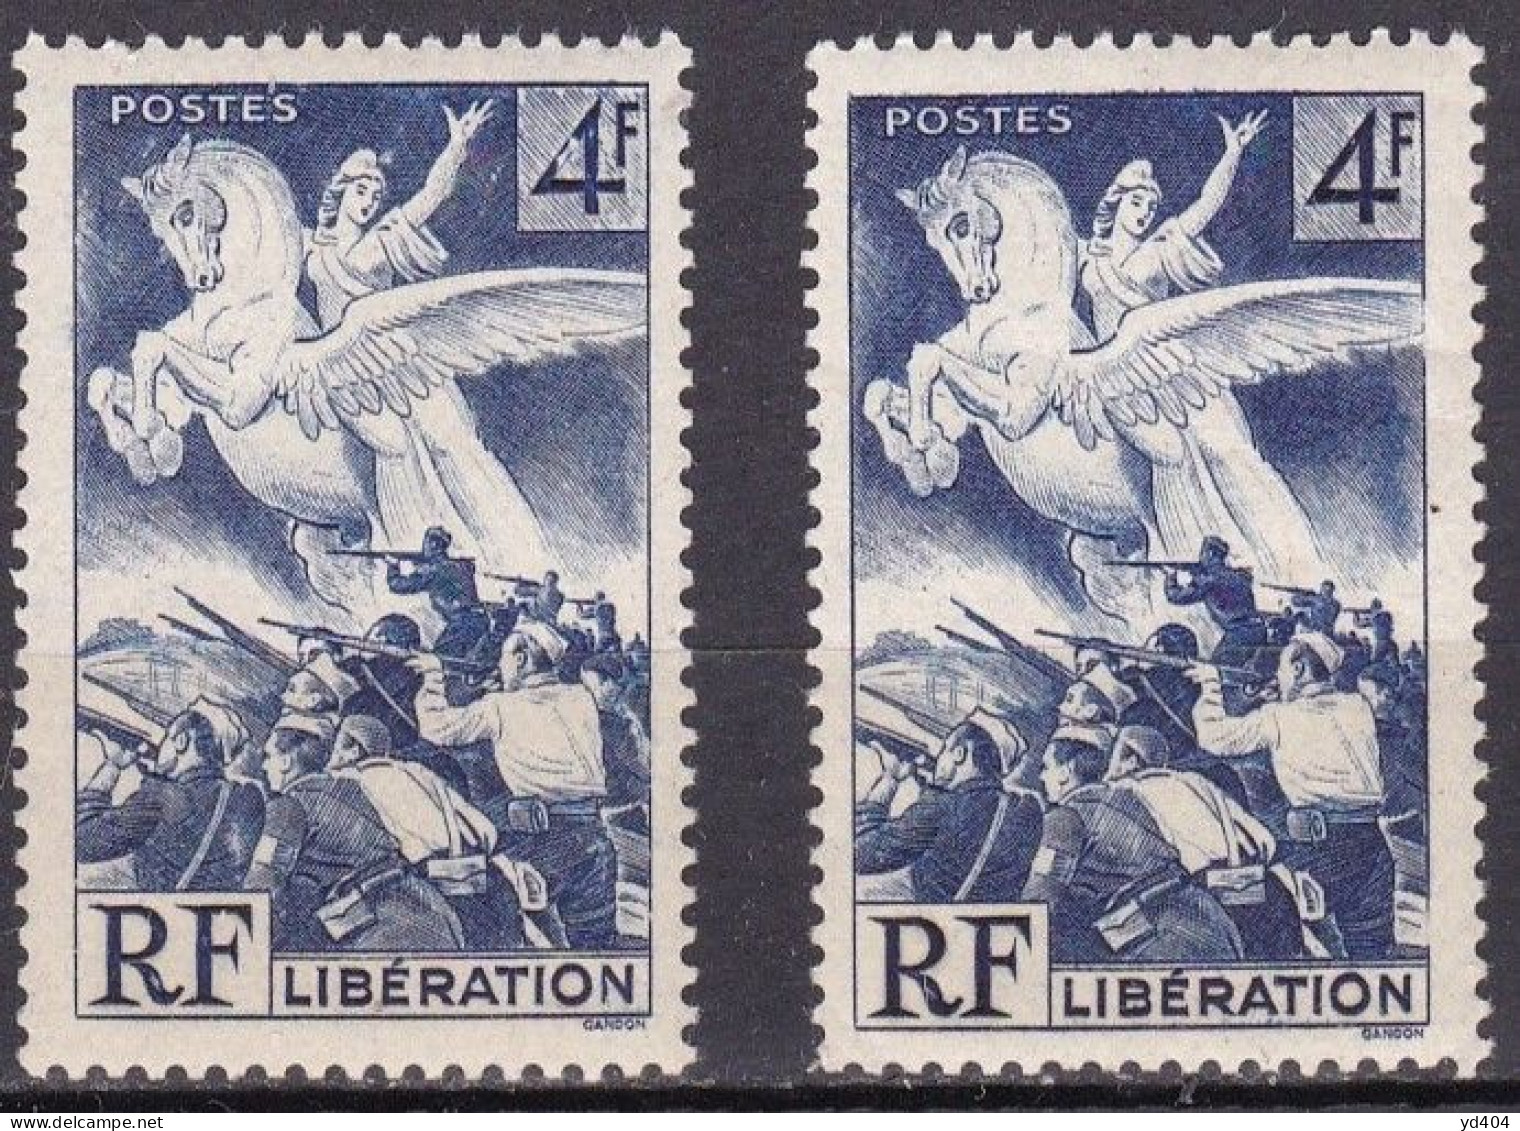 FR7112 - FRANCE – 1945 – LIBERATION - Y&T # 669a MNH - Ongebruikt